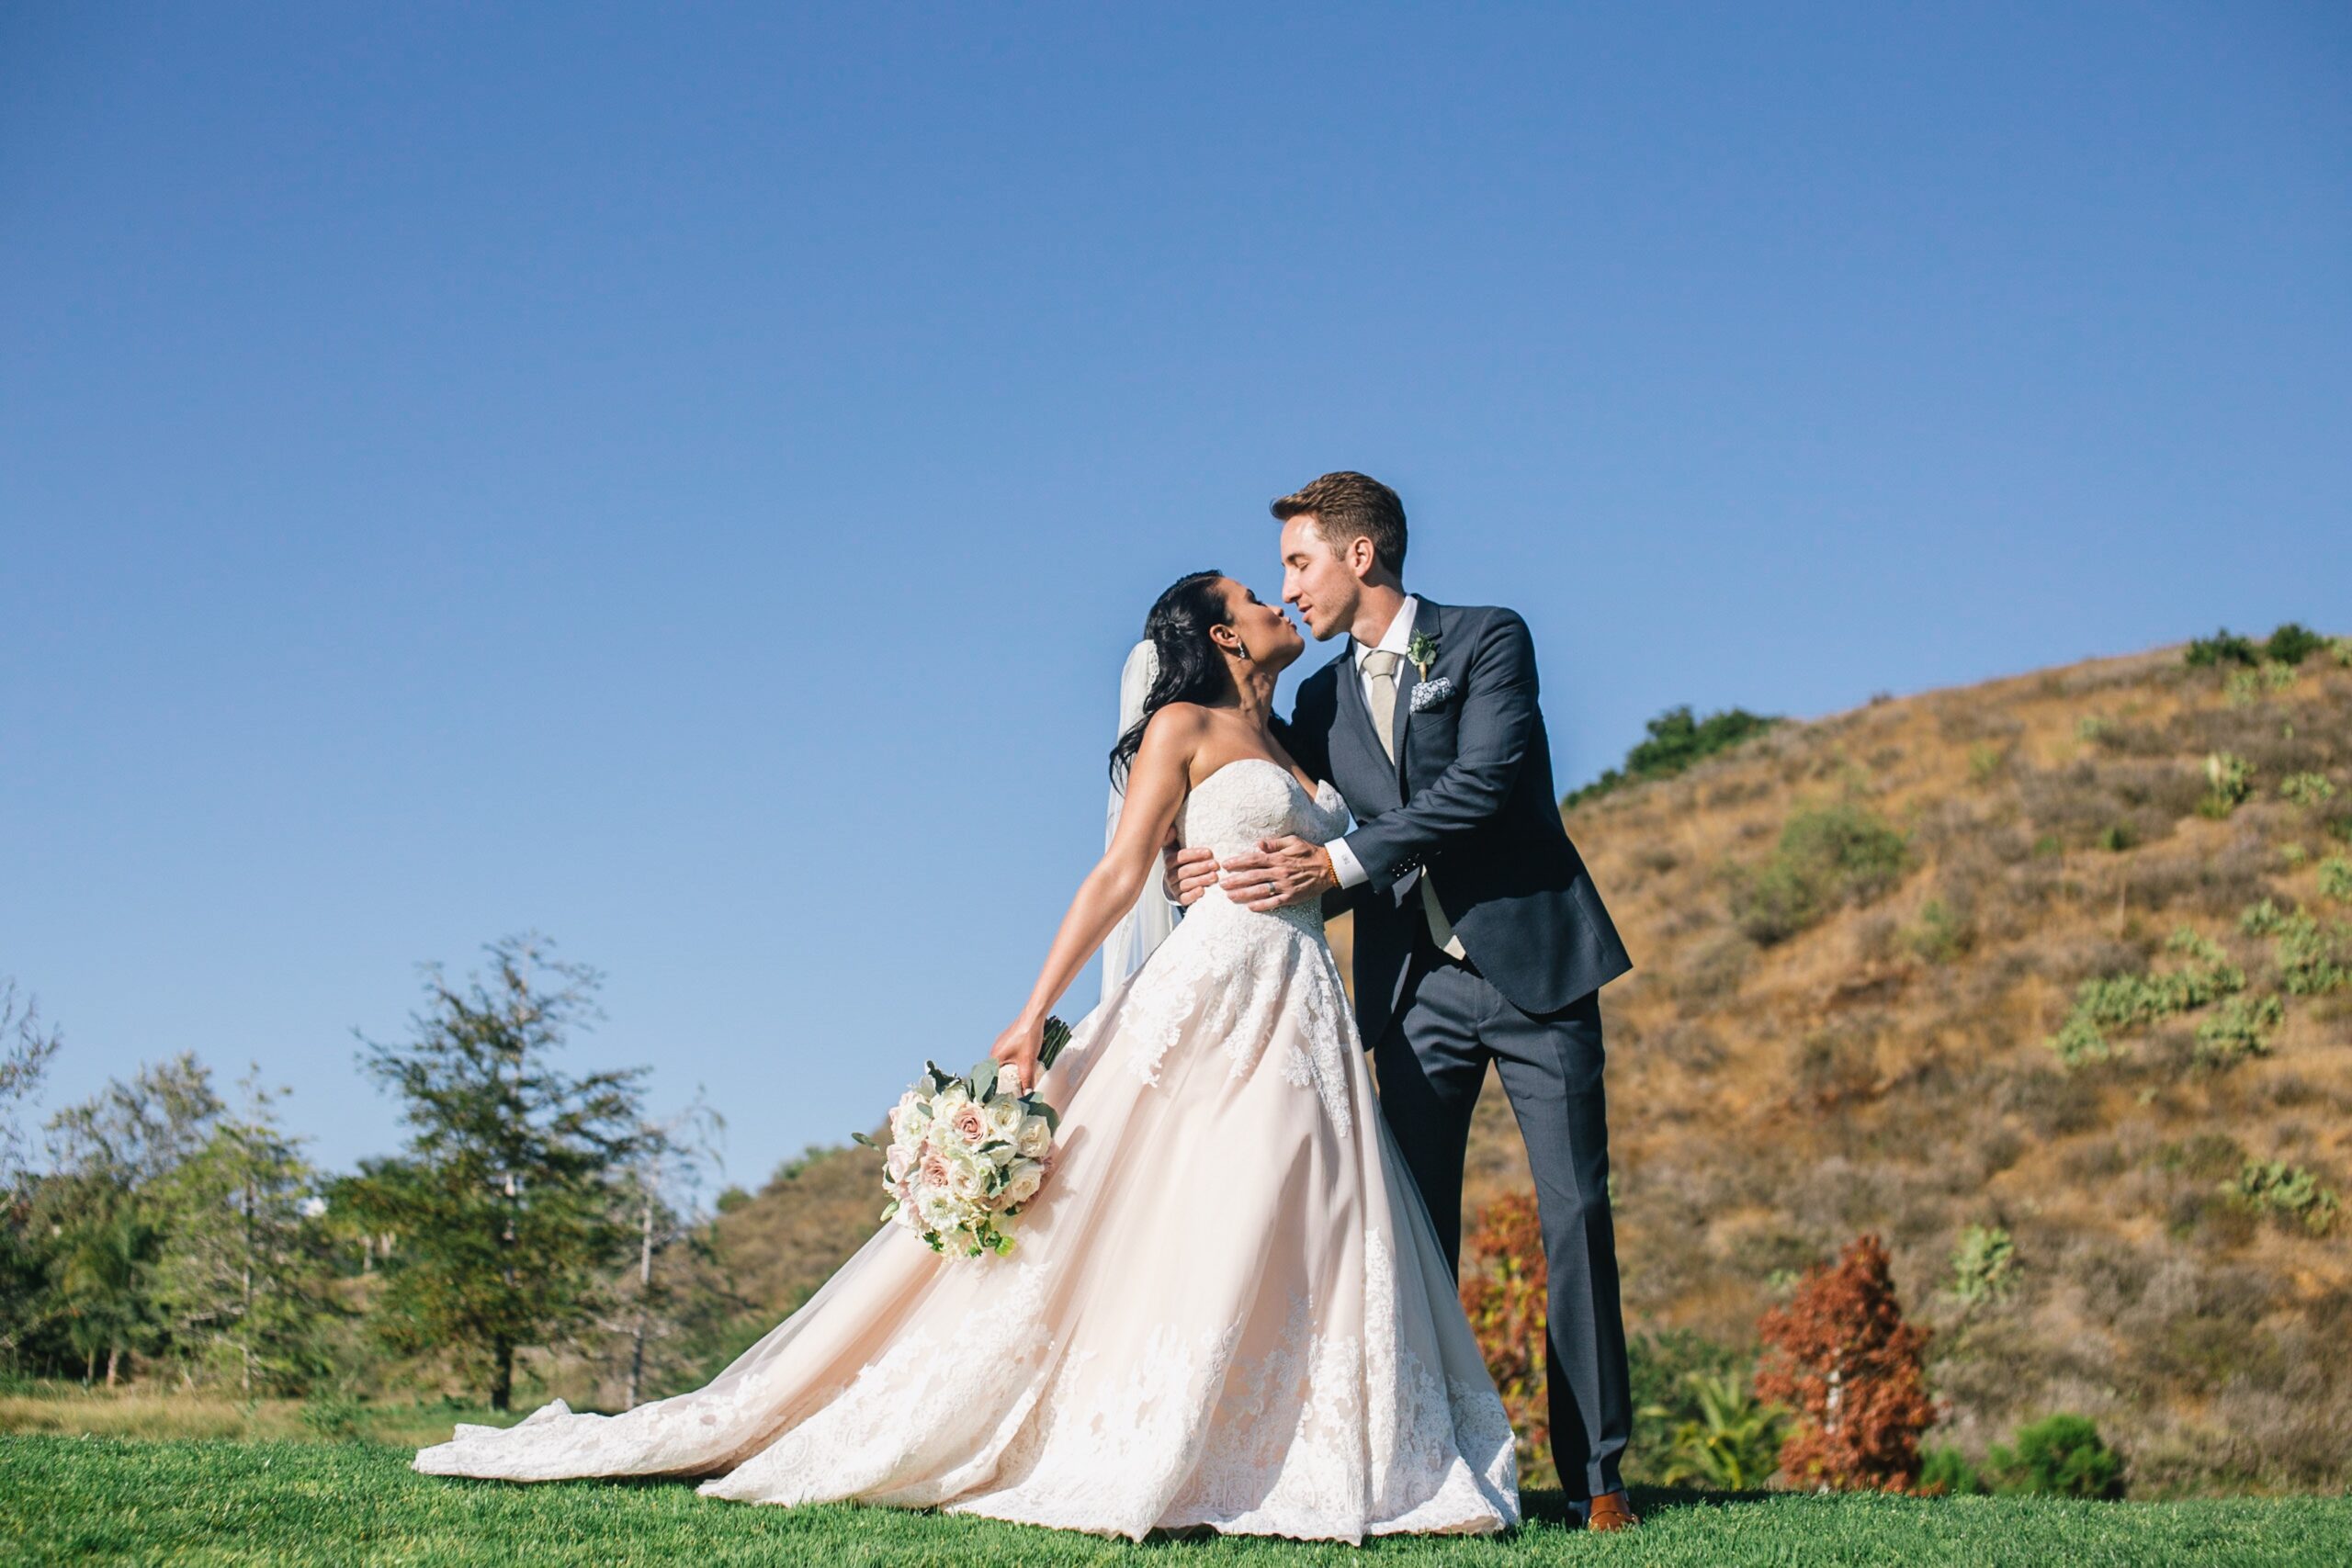 Moorpark Country Club, Moorpark CA - wedding photography in California - 15